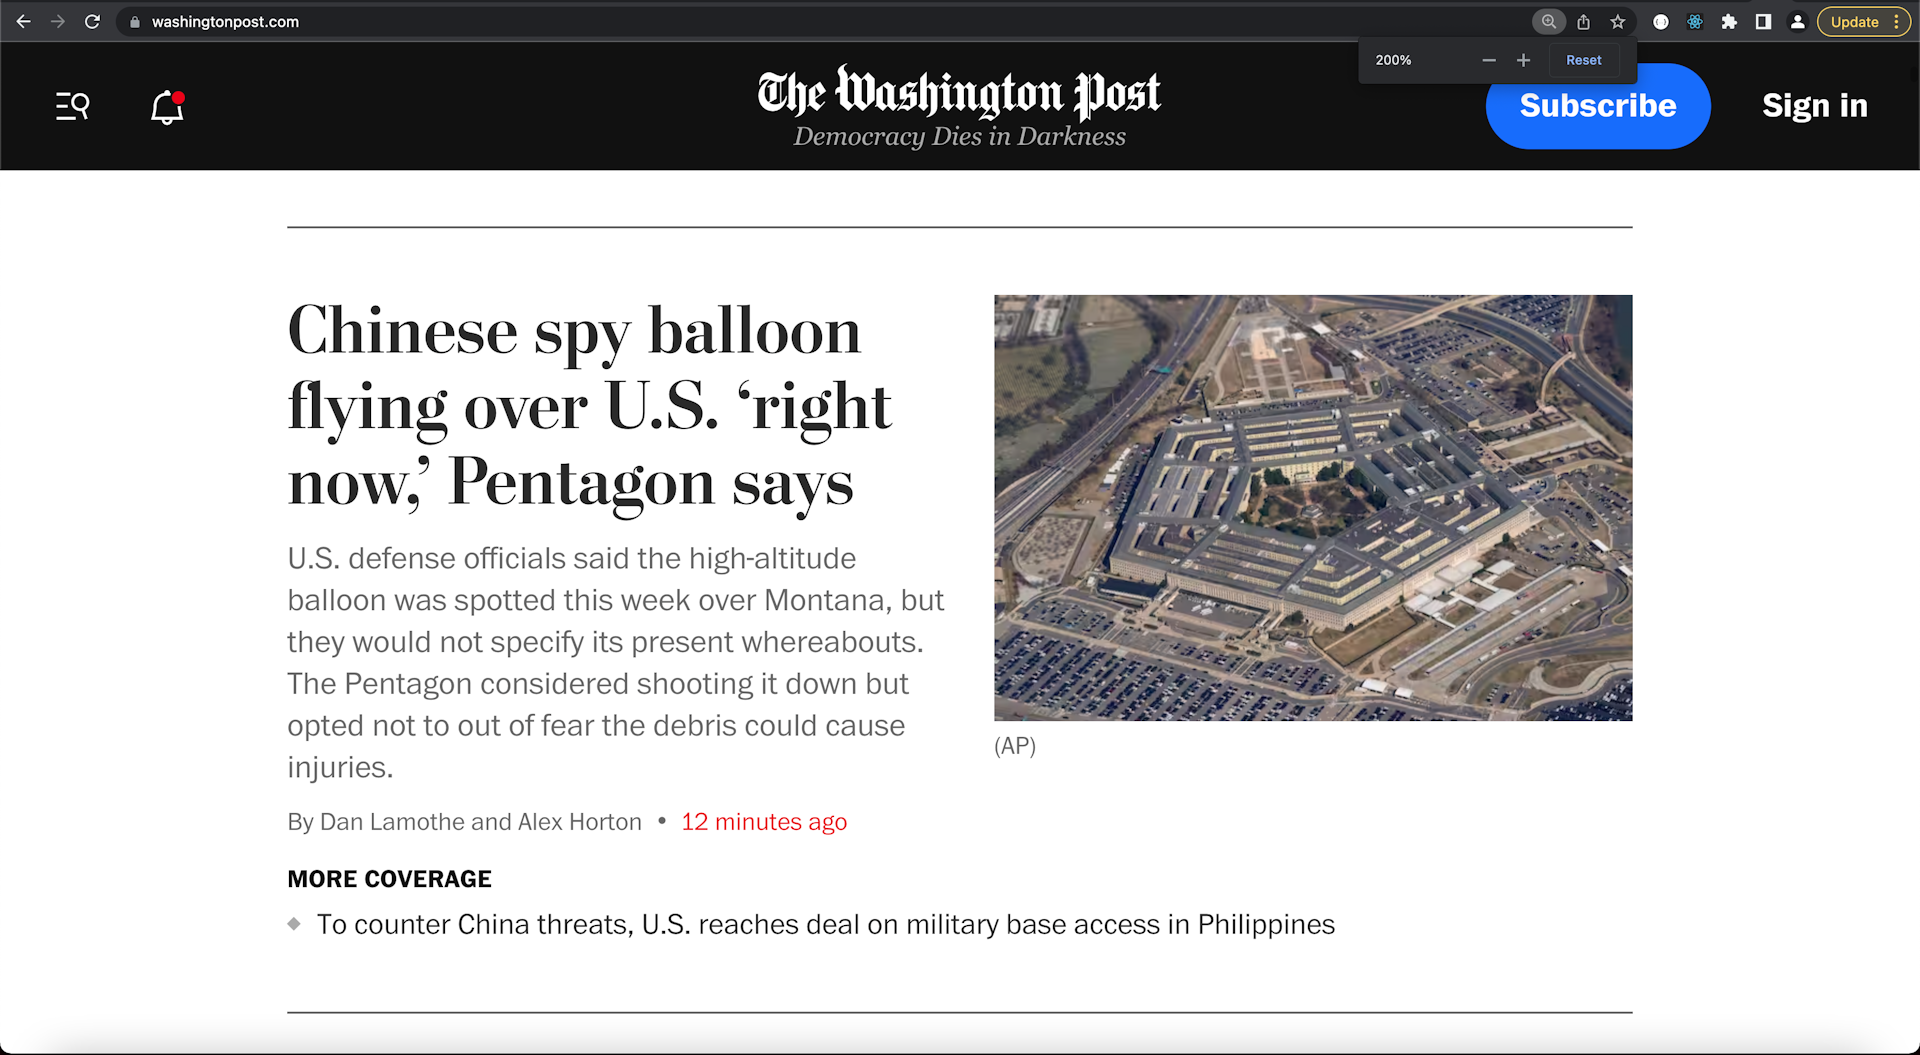 Screenshot shows The Washington Post homepage at 200% page zoom.